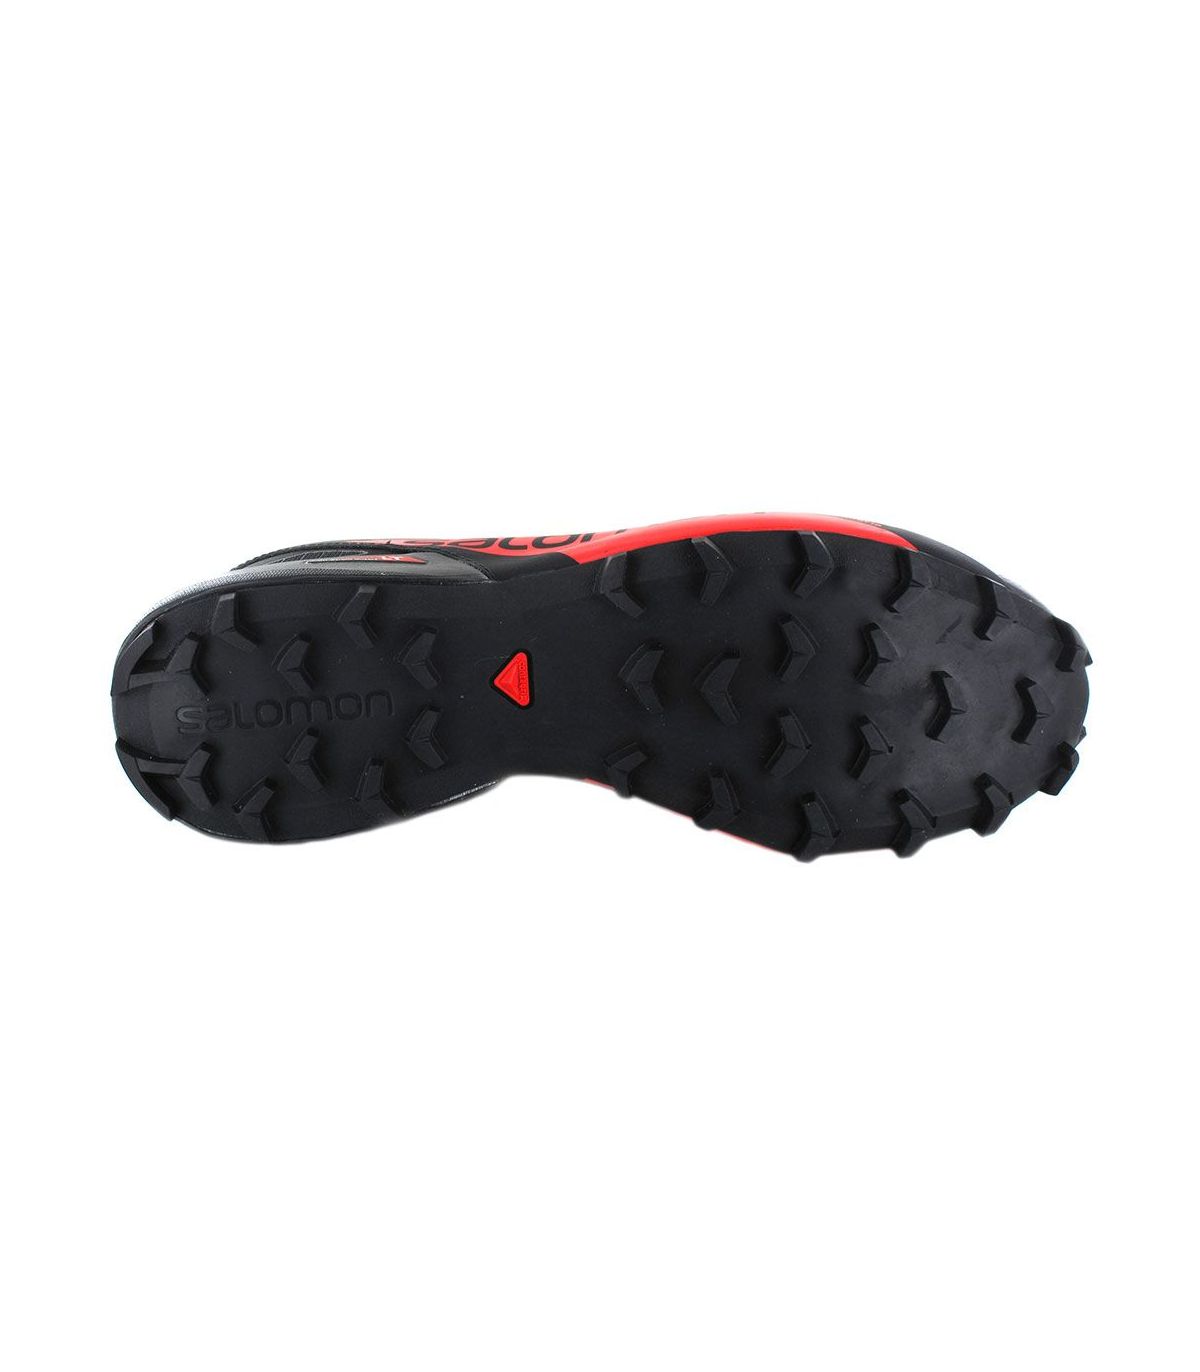 Grabar no usado seno ➤Salomon S-Lab Speedcross - Running Shoes Trail Sizes 42 2/3 Colour Black